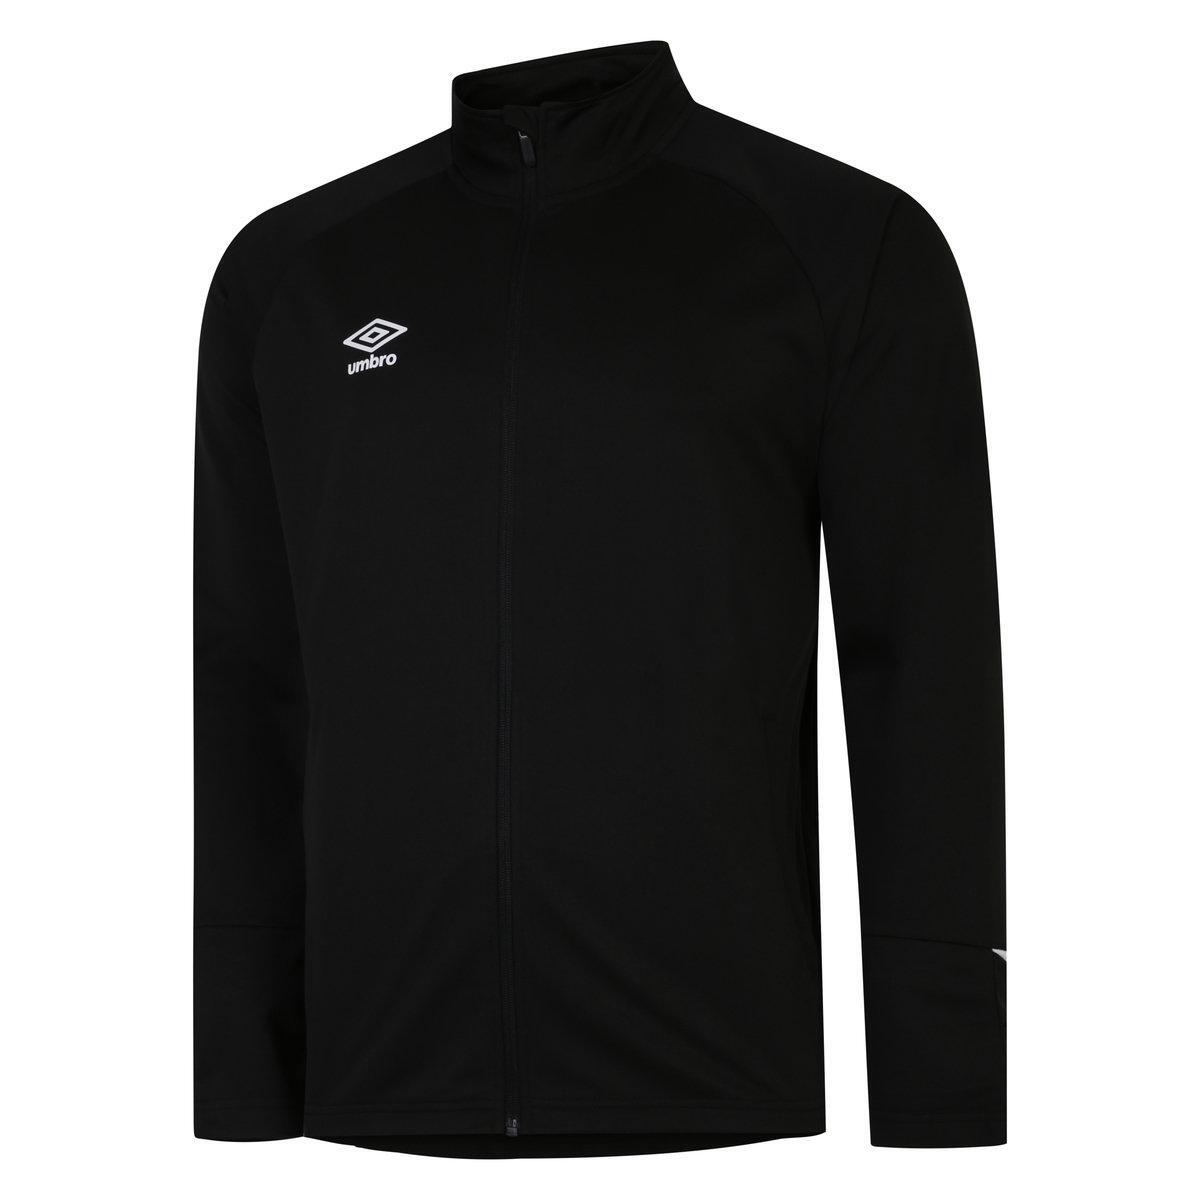 UMBRO Mens Total Training Knitted Track Jacket (Black/White)